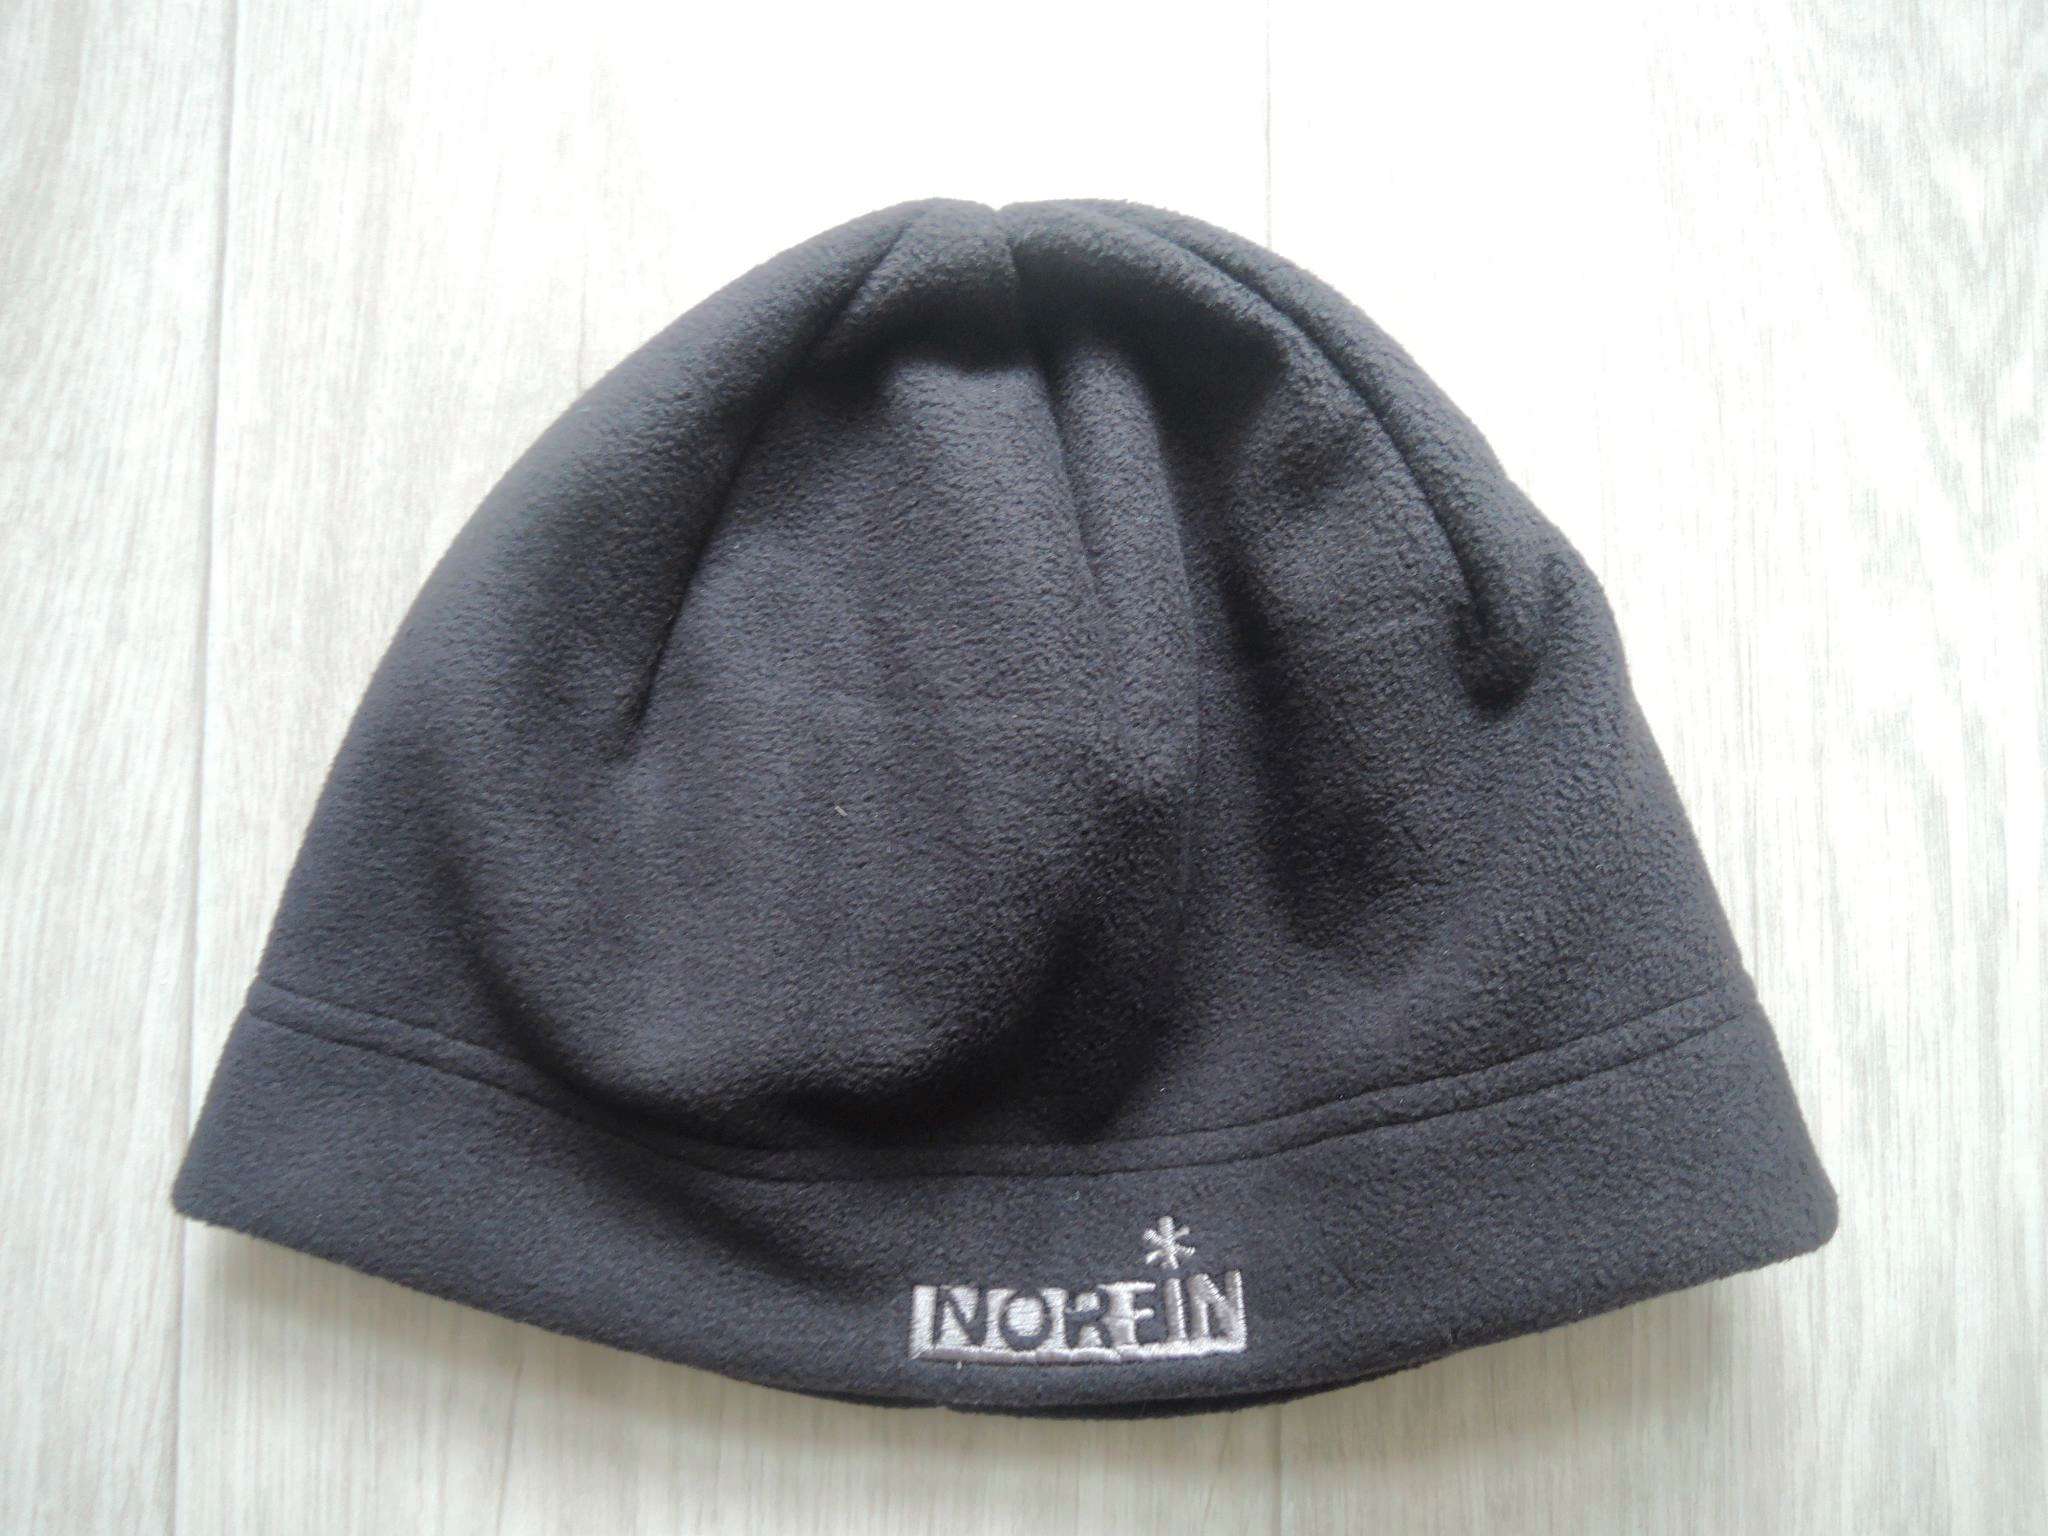 Norfin шапка